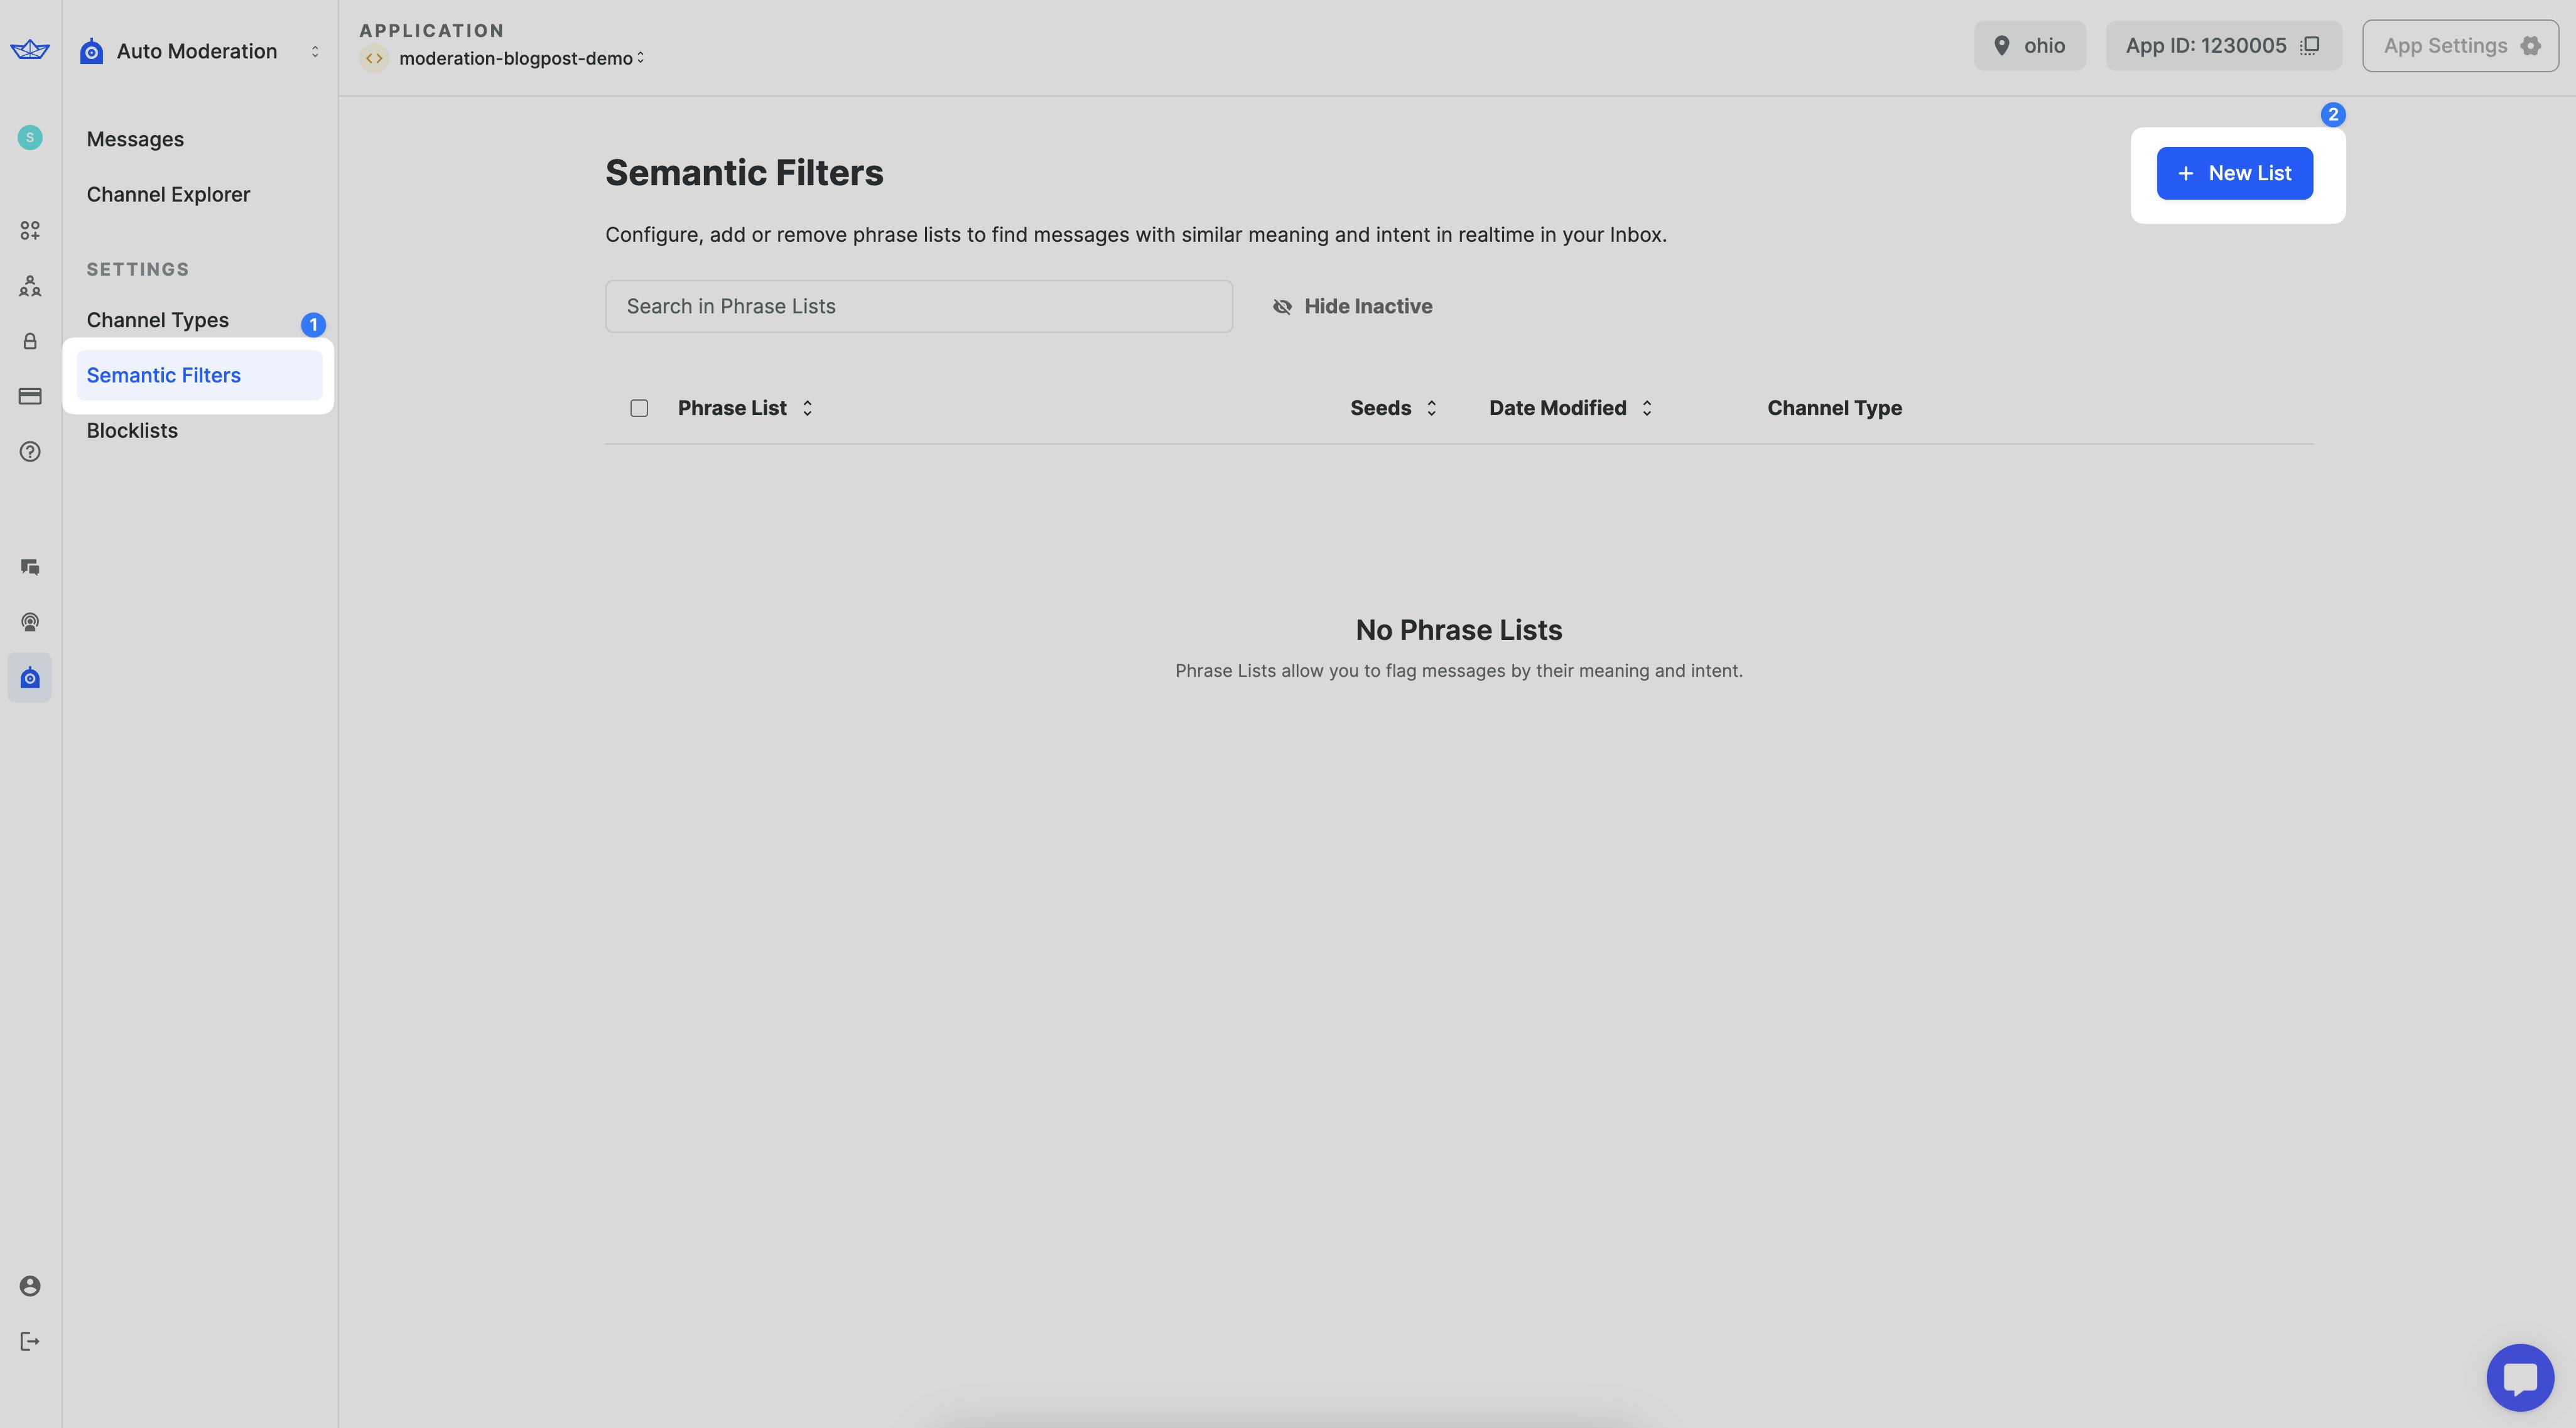 Semantic Filter configuration screen